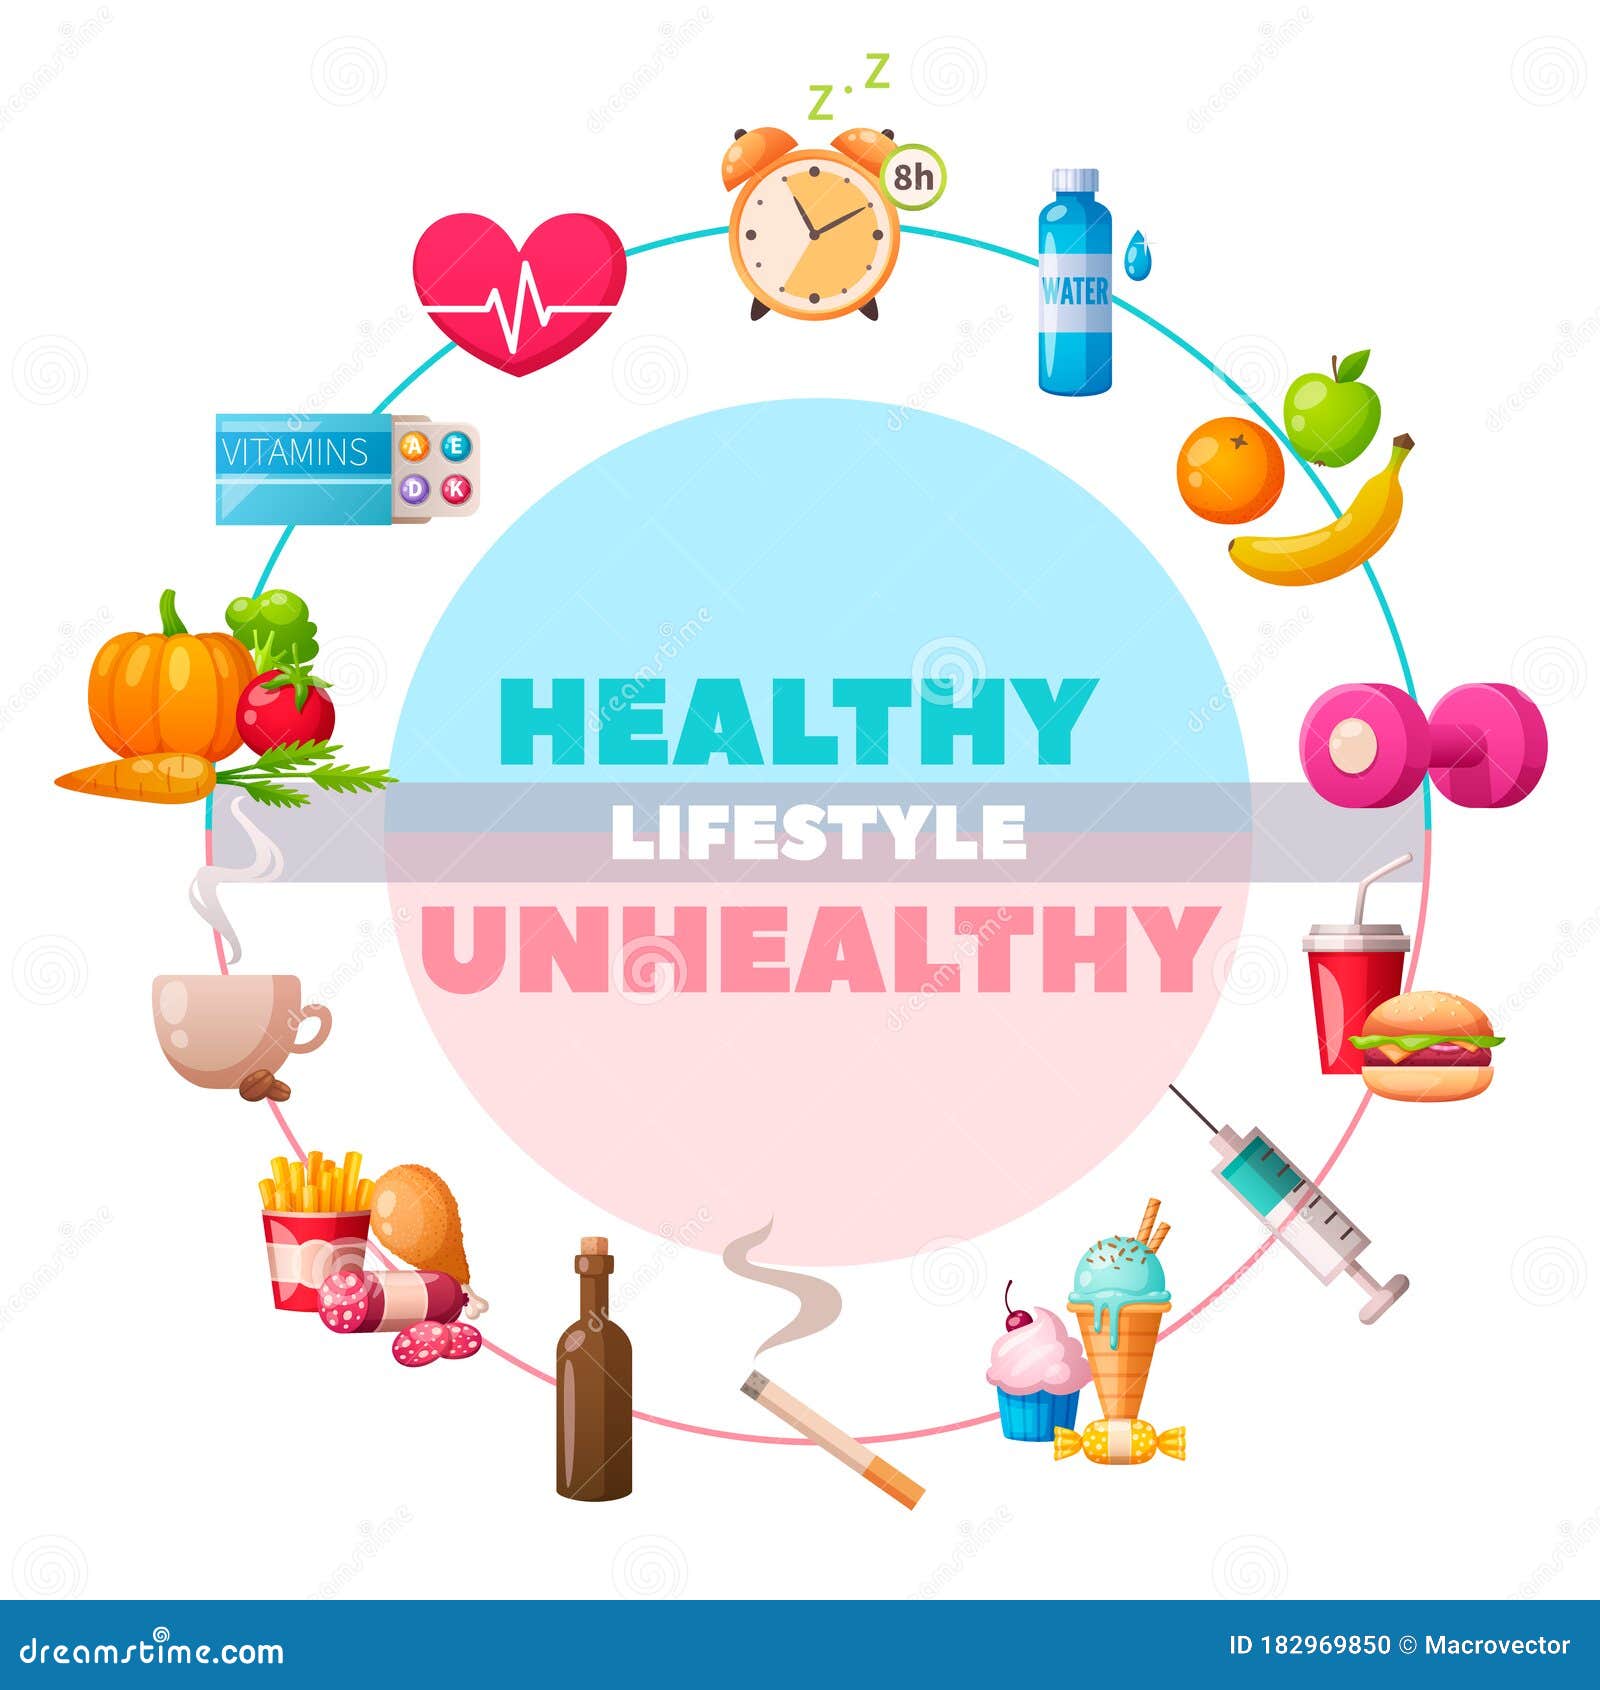 healthy lifestyle cartoon composition